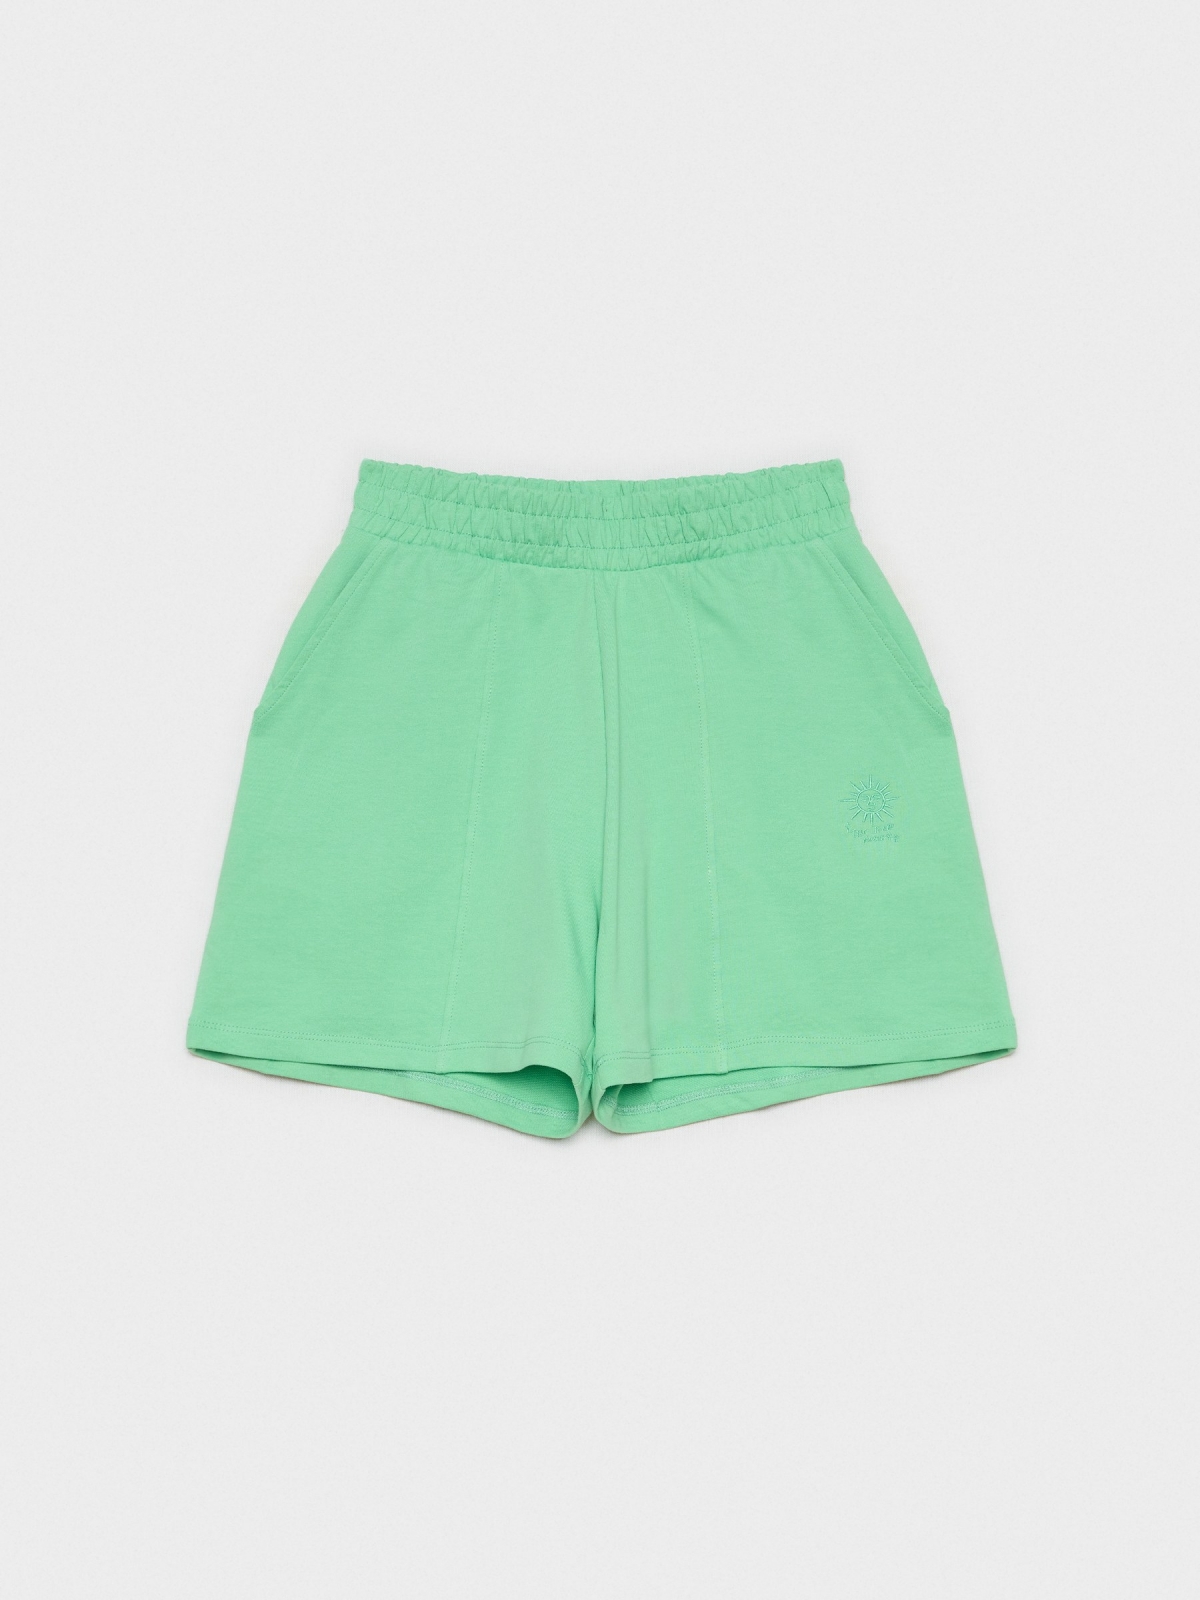  Plush green shorts mint